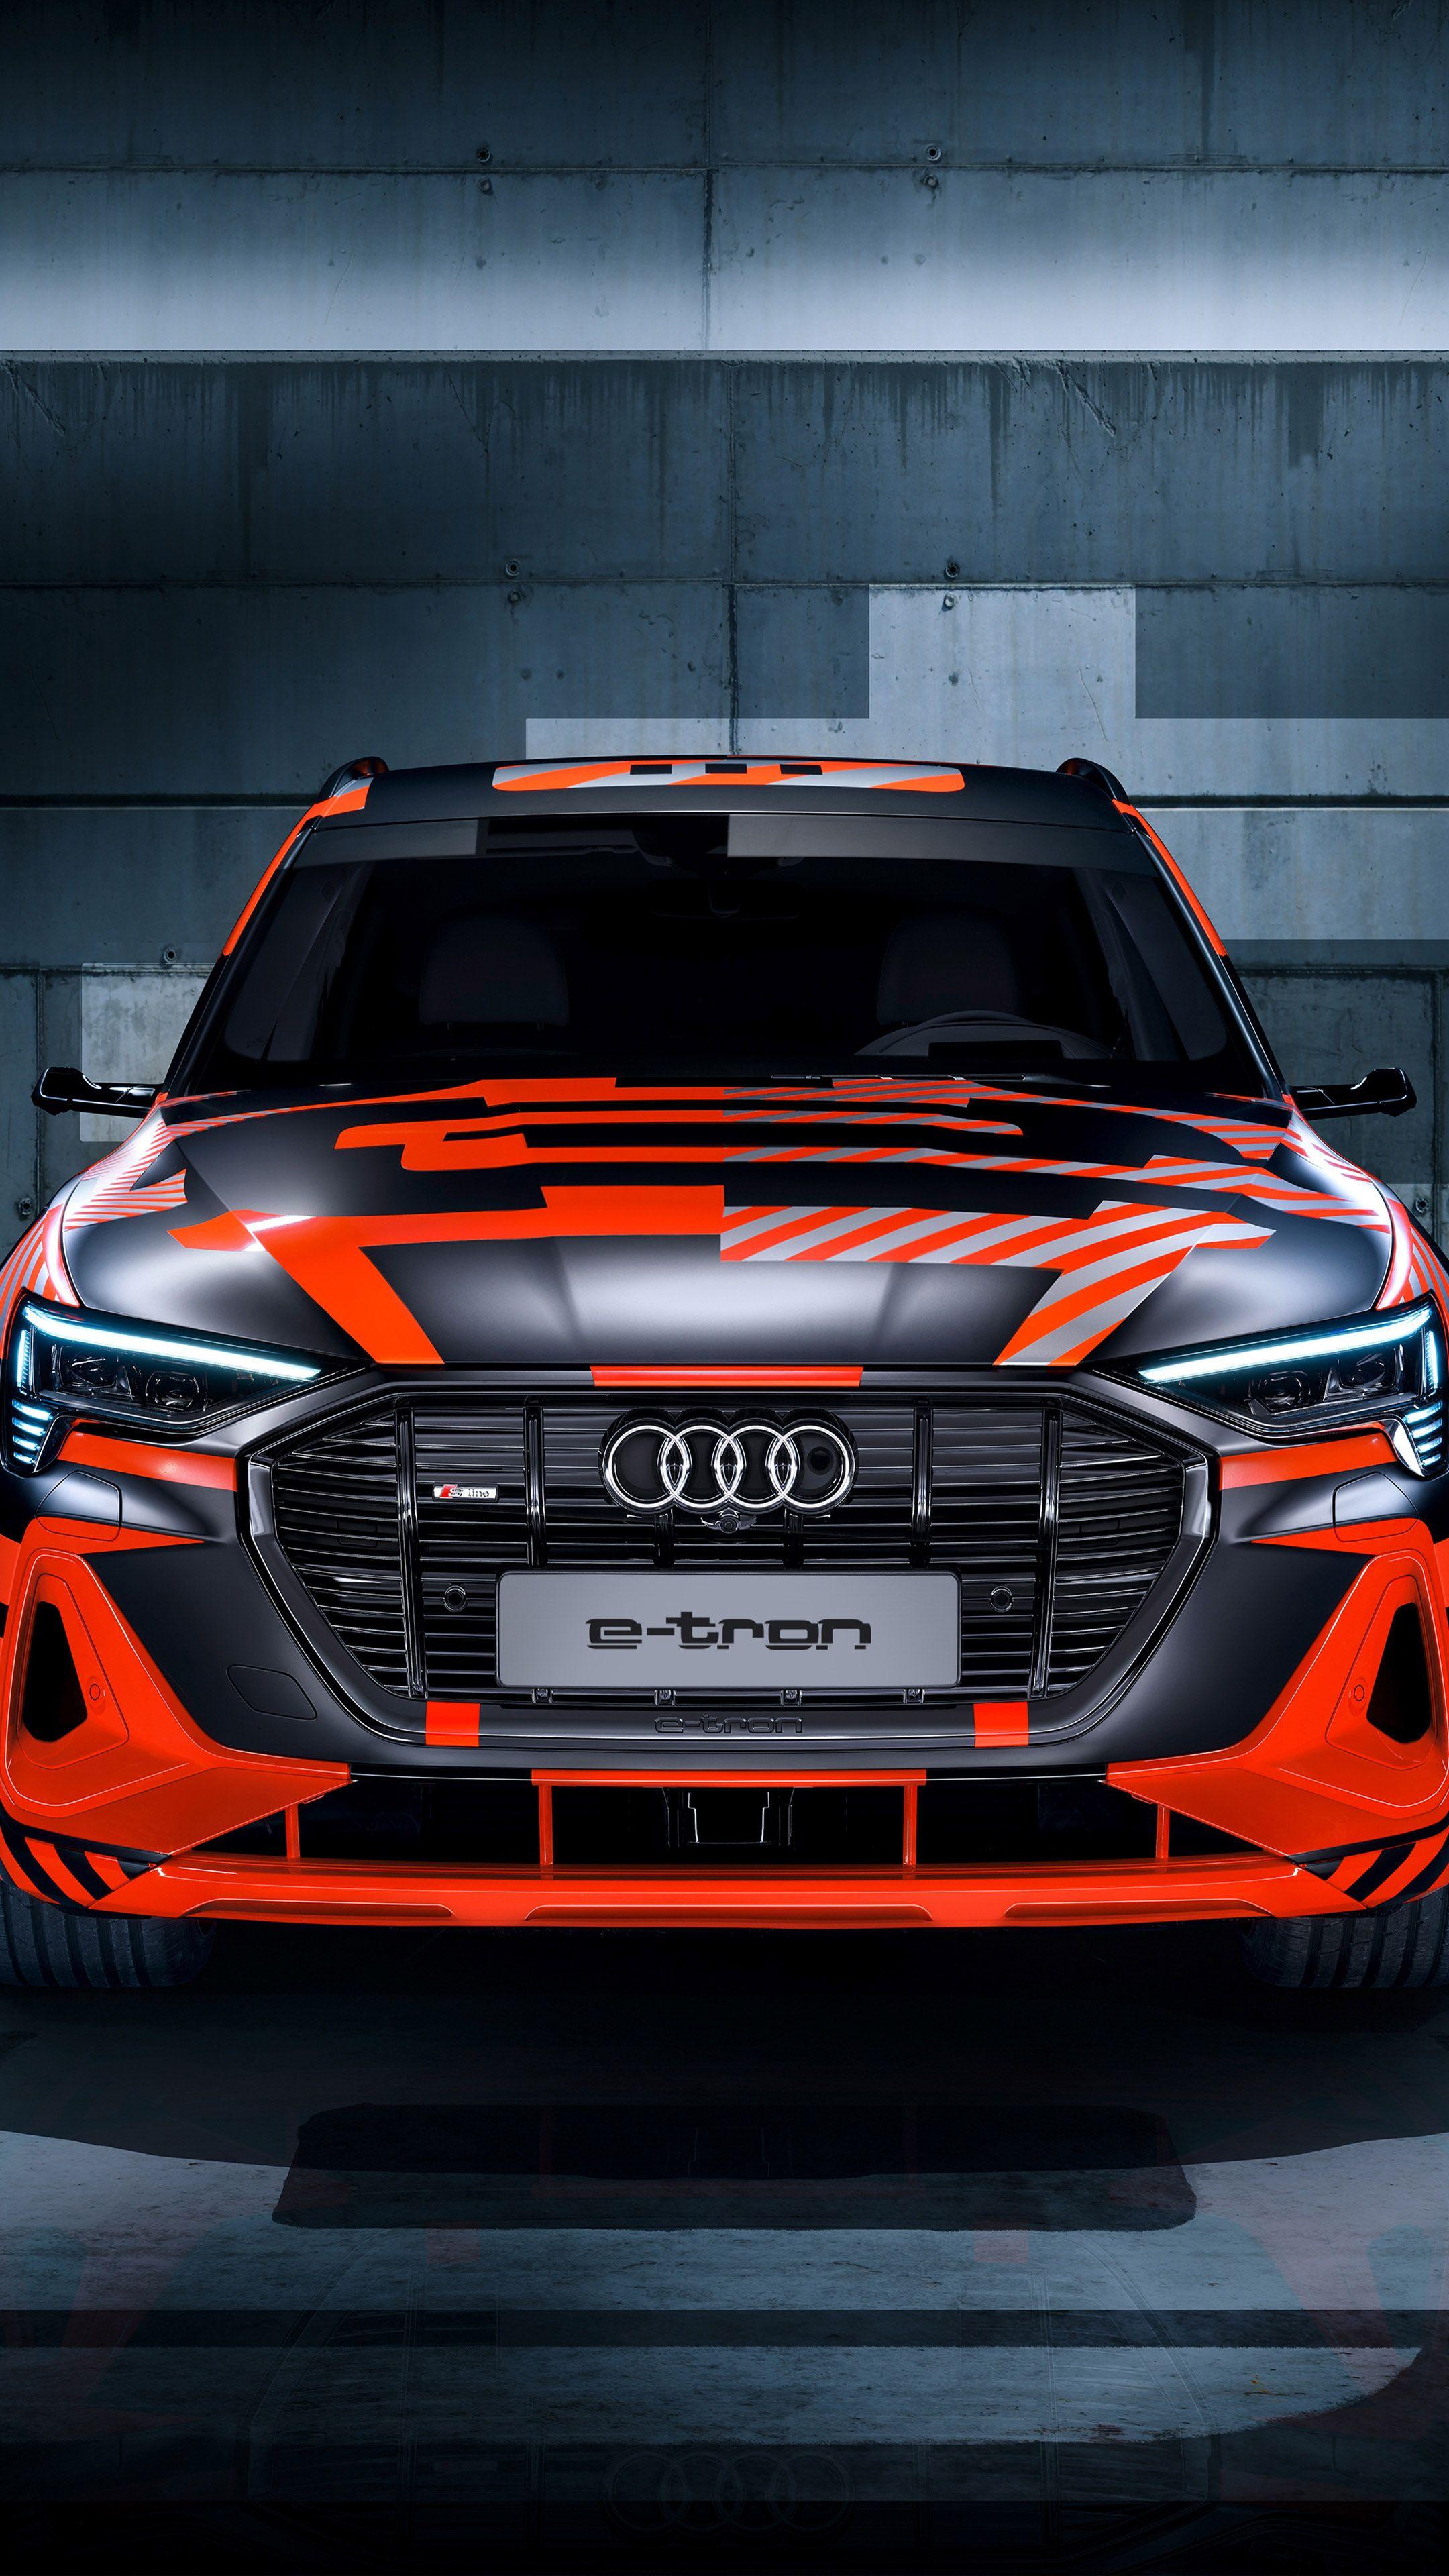 Audi E Tron Sportback Prototype Concept Cars 4K Ultra HD Mobile Wallpaper